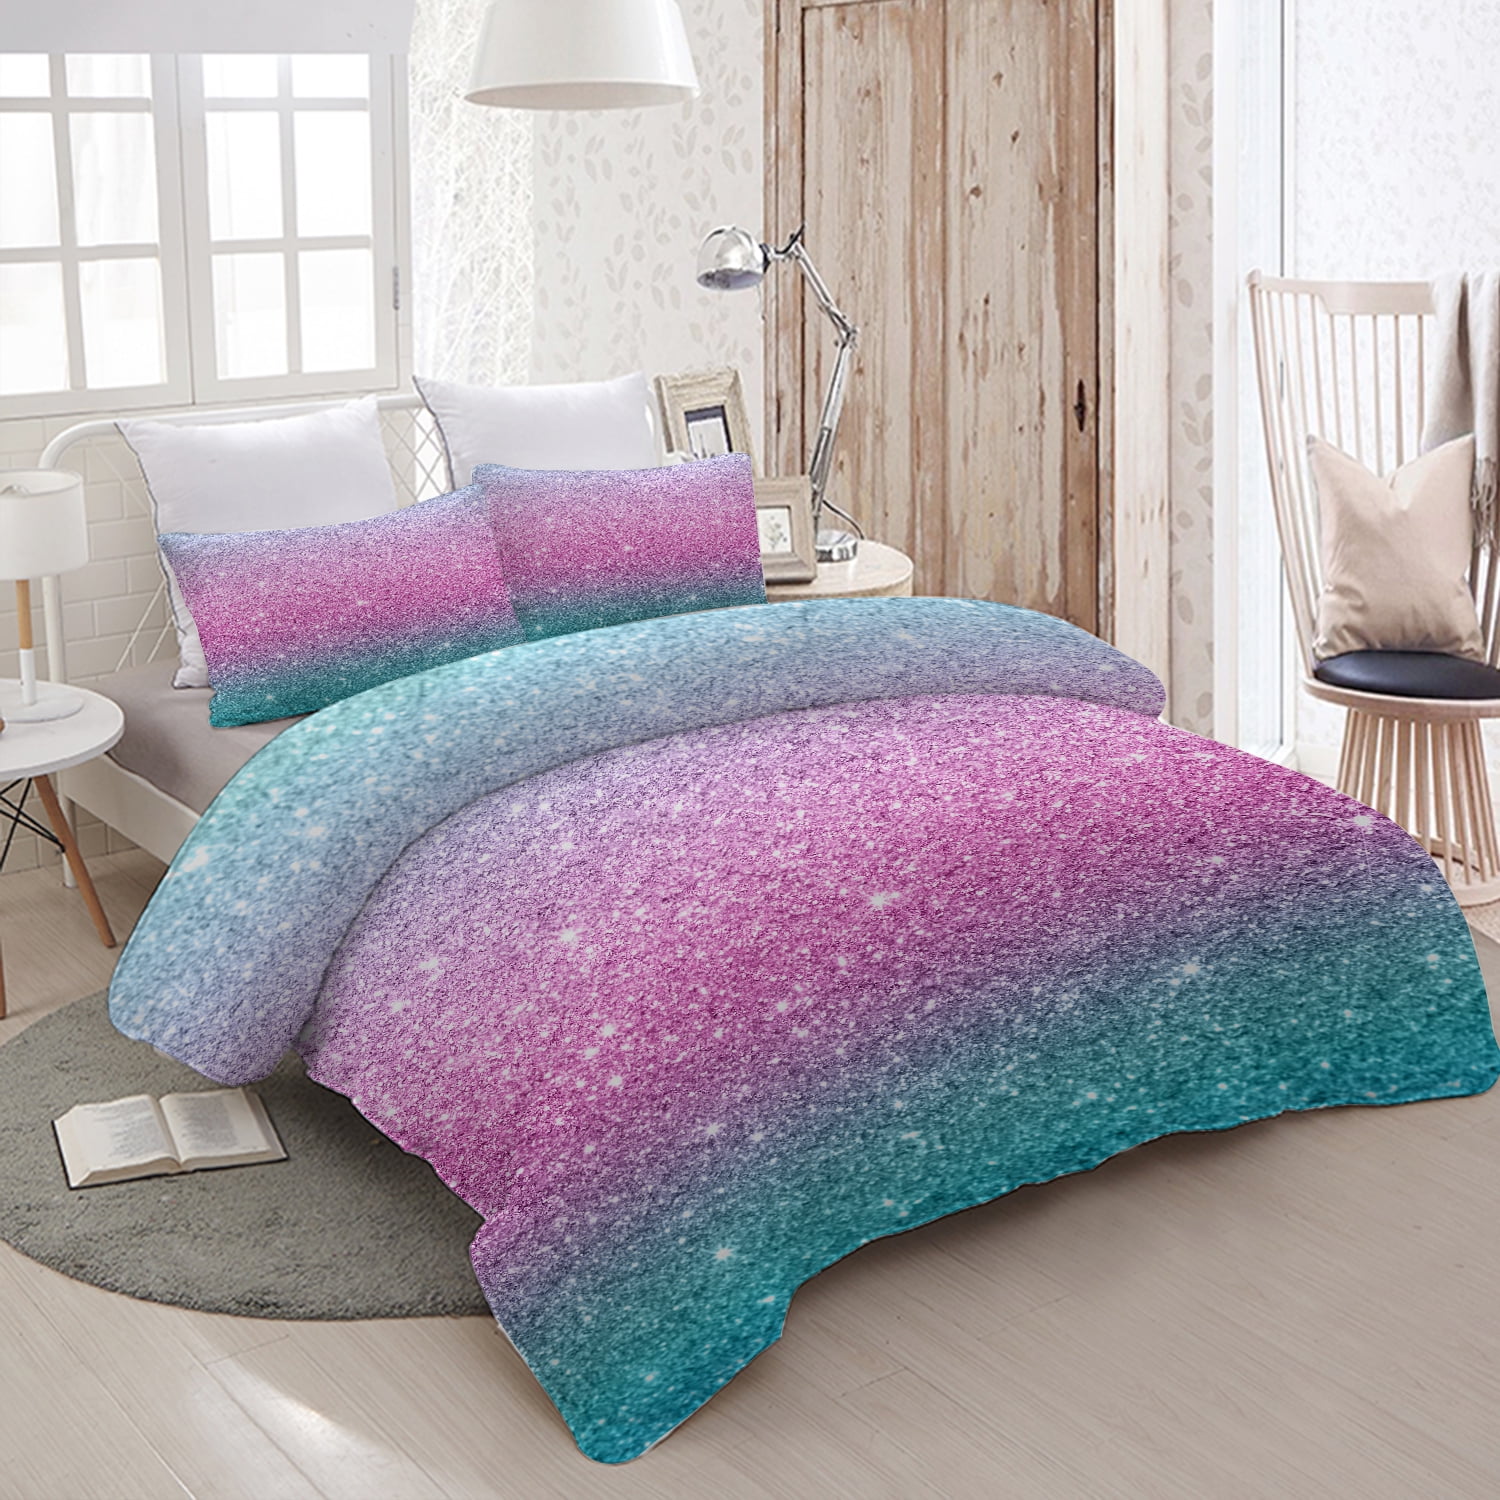 Kids Teen Comforter Set Full Twin Unicorn Floral Teal Blue Pink Striped Bedding 